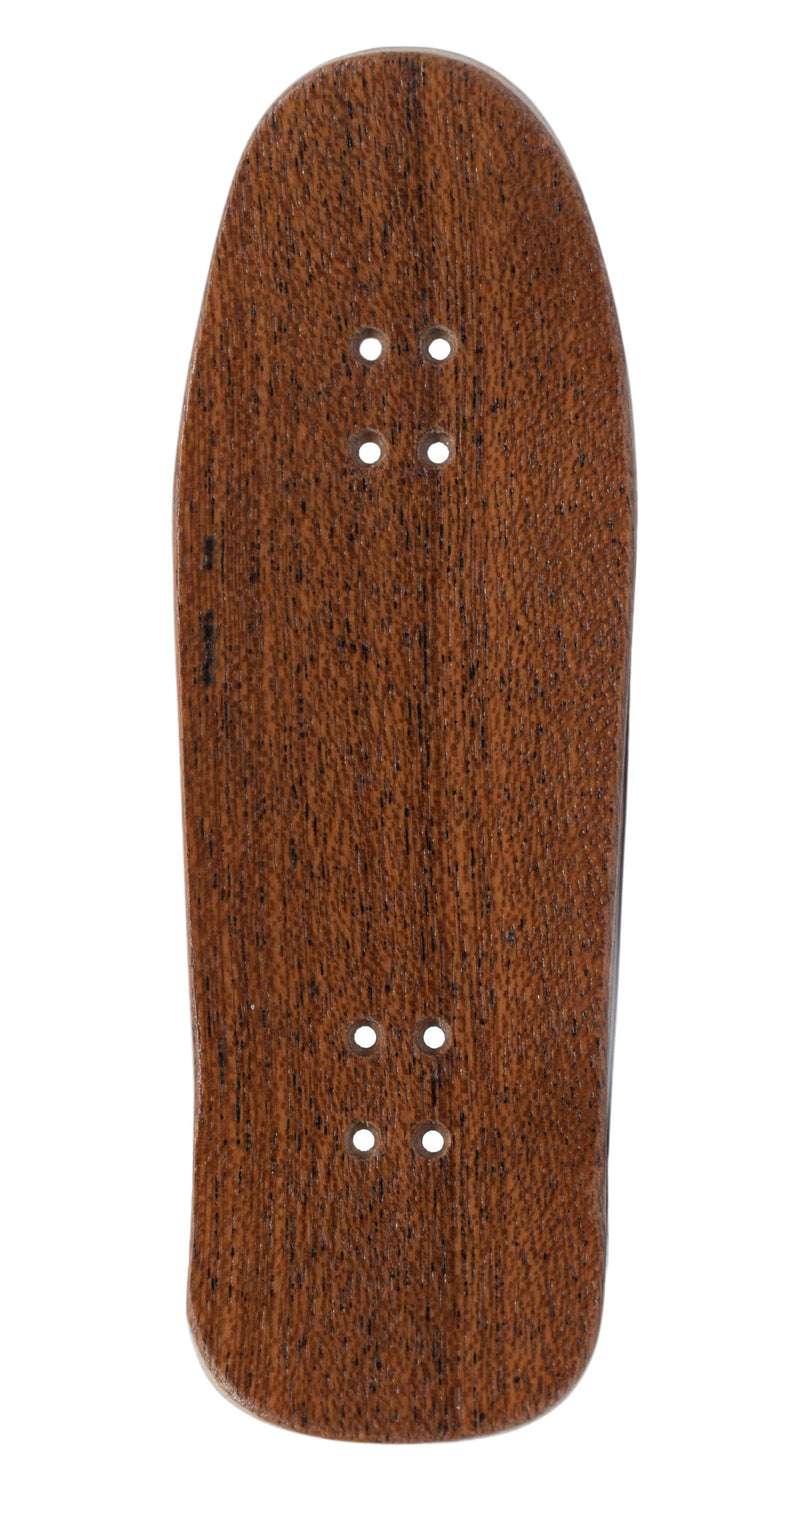 Teak Tuning Carlsbad Cruiser Wooden Fingerboard Deck, "Leather Bound Book" - 34mm x 100mm